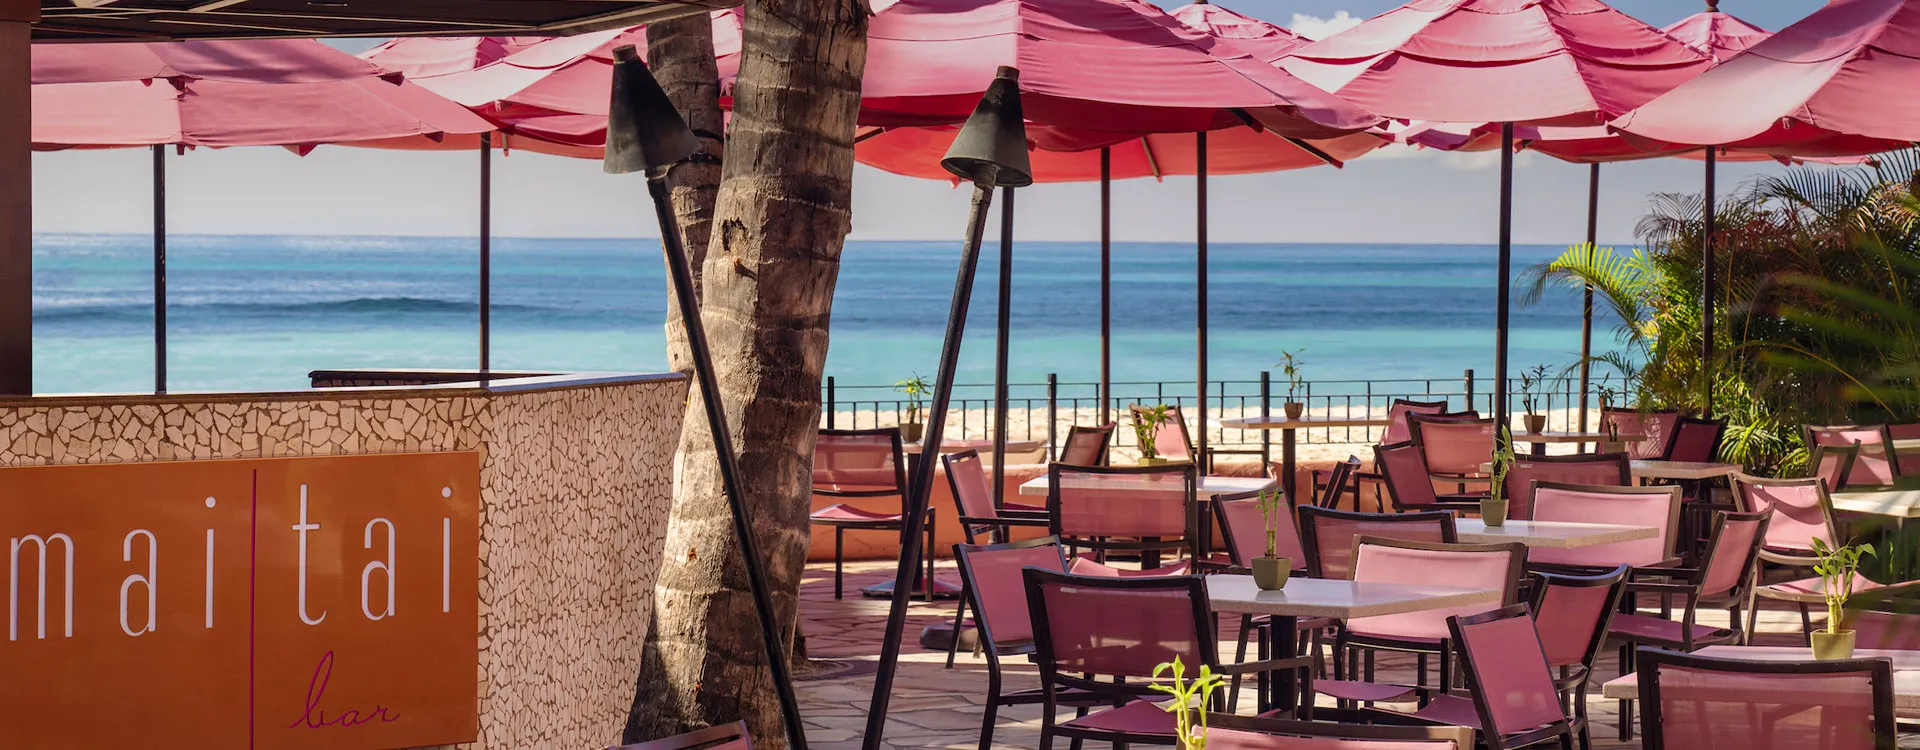 MAI TAI BAR カジュアルなビーチフロントの屋外レストラン&バー